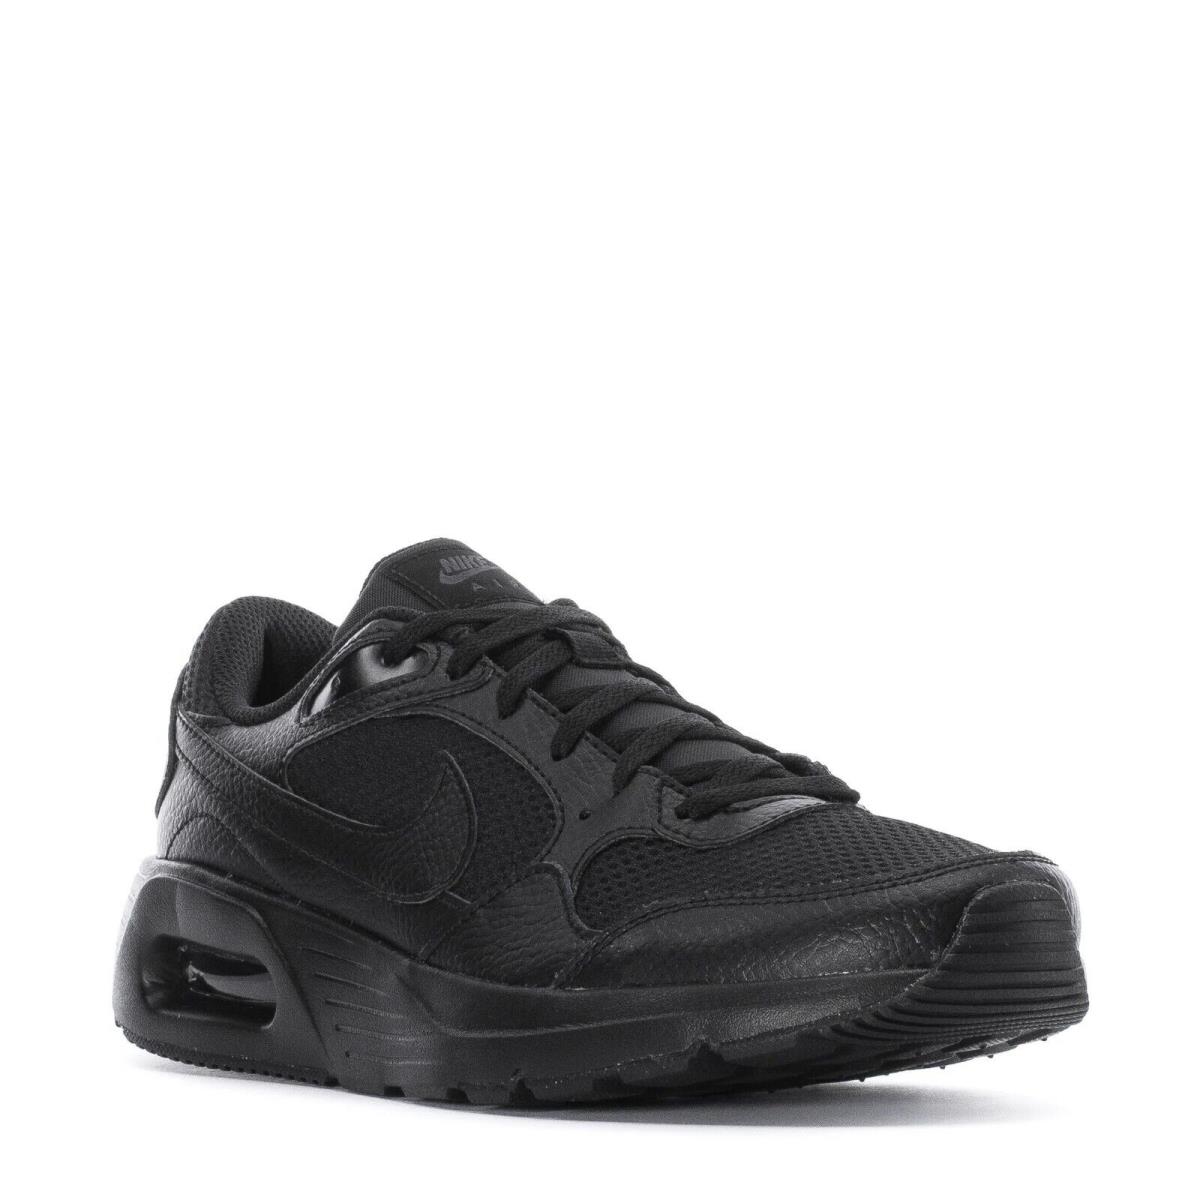 Big Kid`s Nike Air Max SC Black/black-black CZ5358 003 - Black